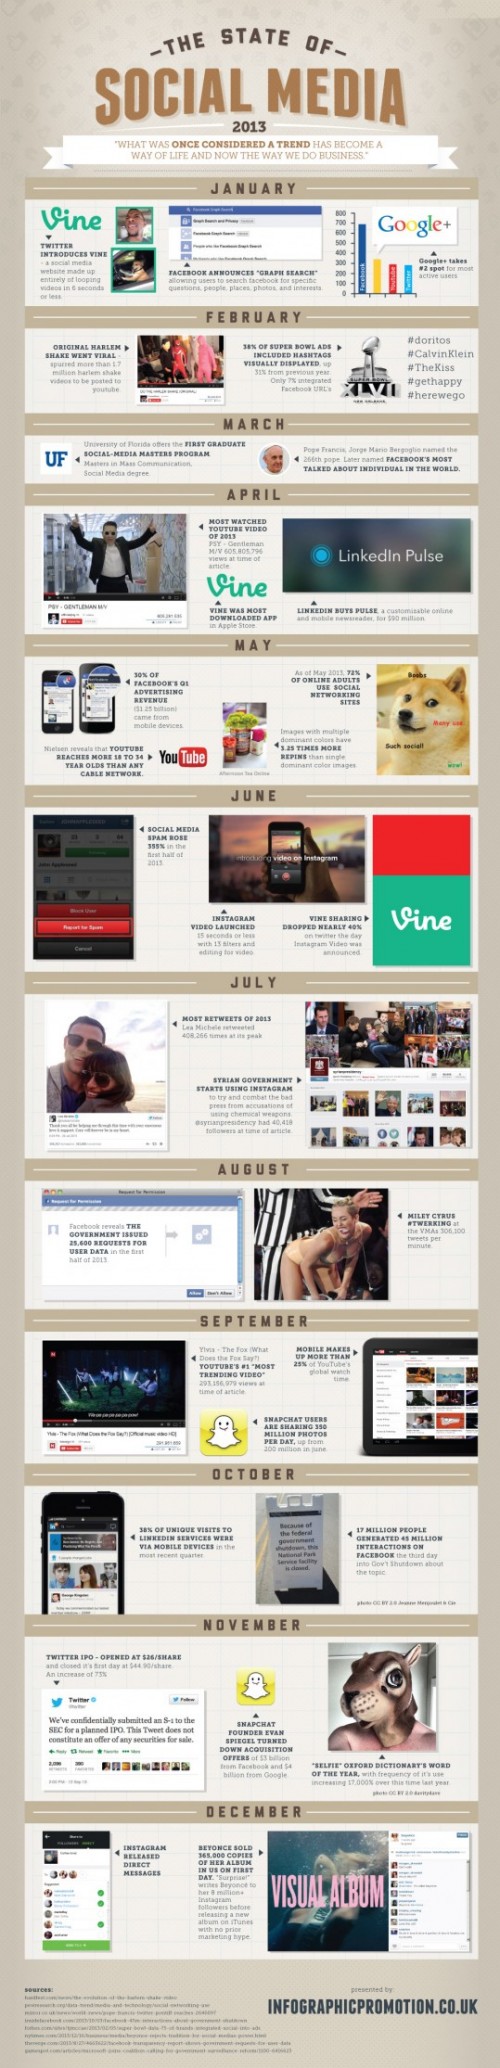 infographic: the state of social media 2013 - viralblog.com